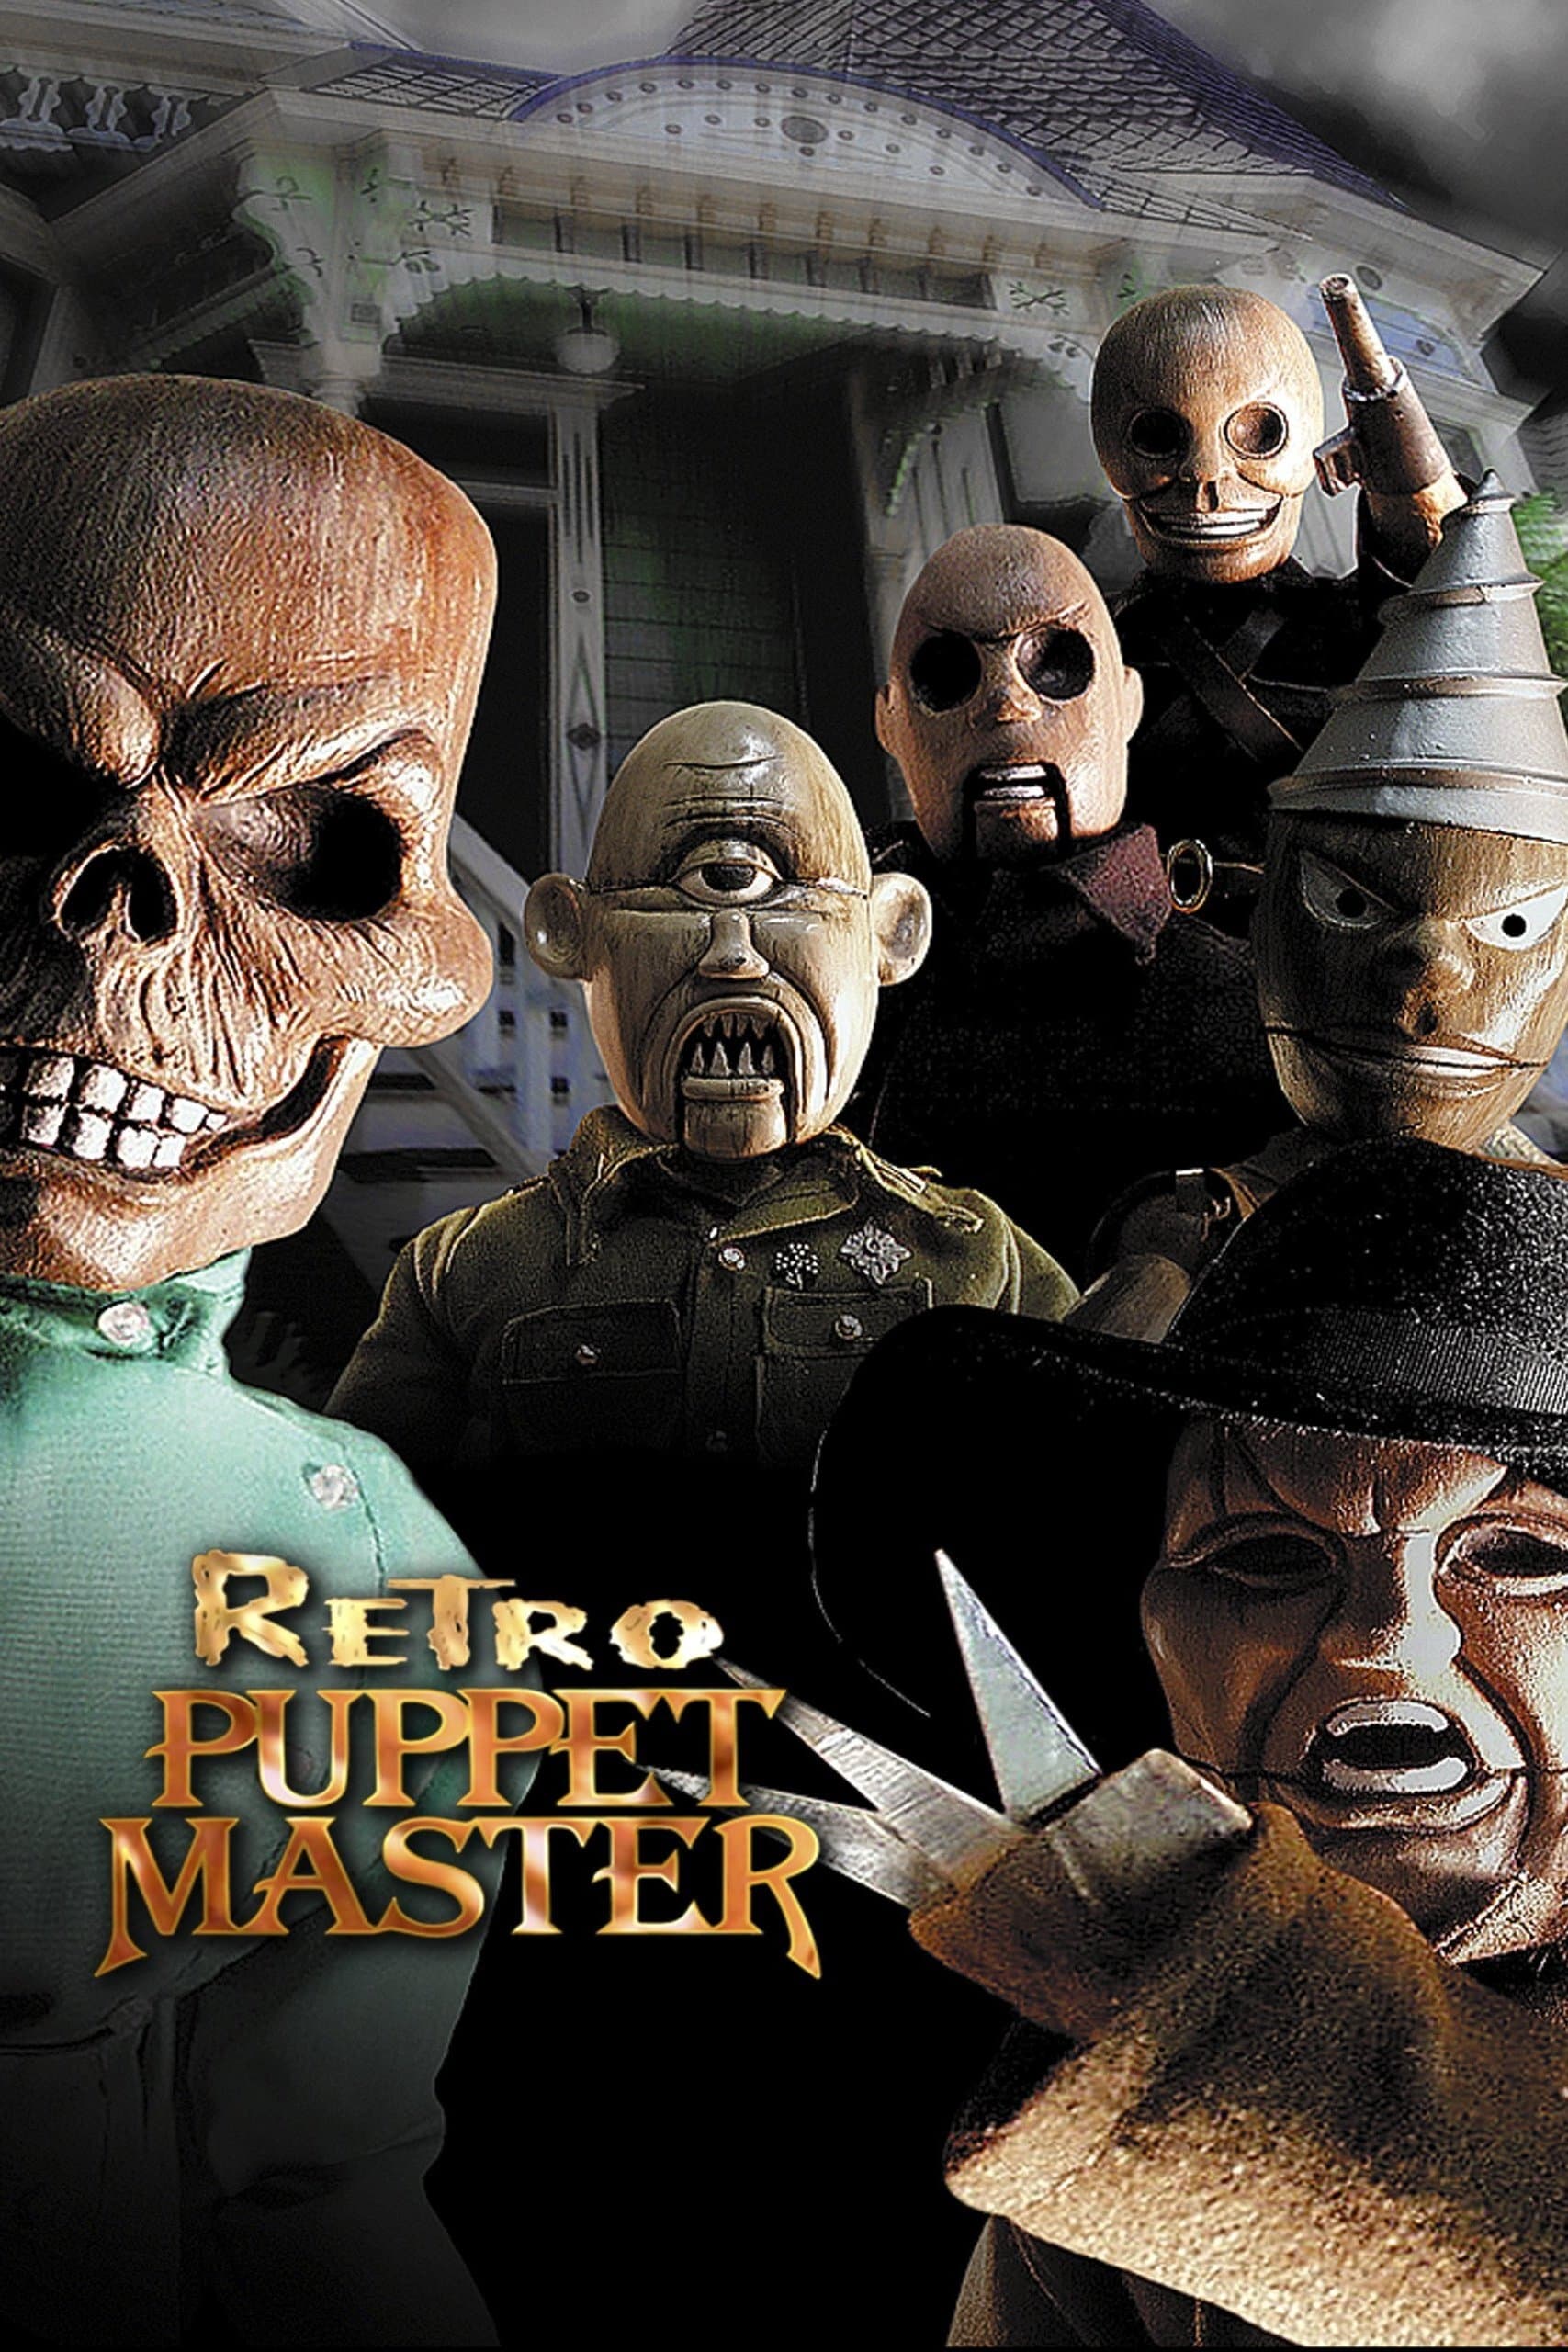 Retro Puppetmaster (1999)